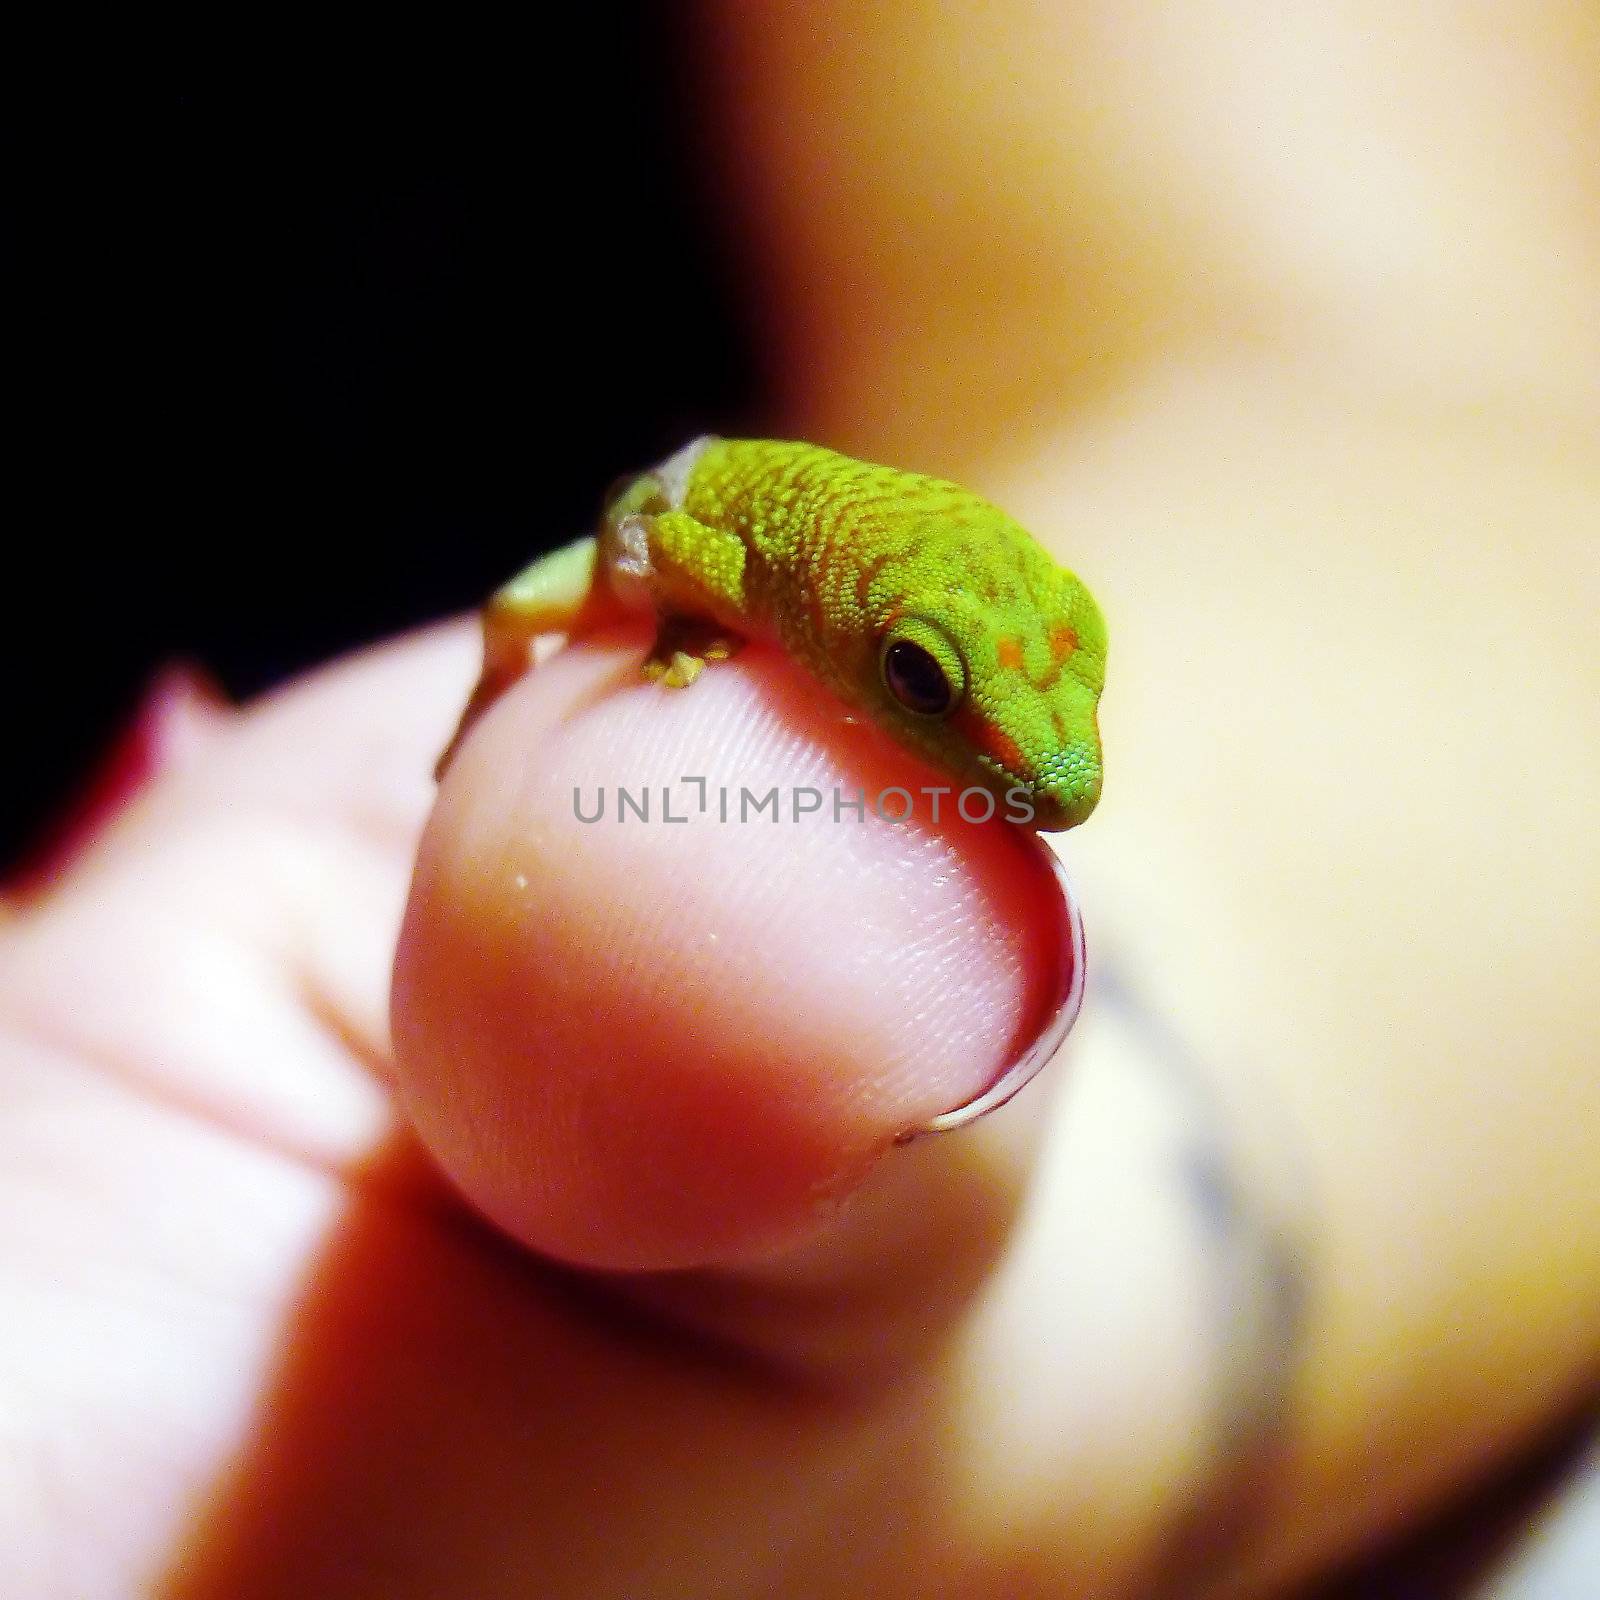 a baby madagascar giant day gecko